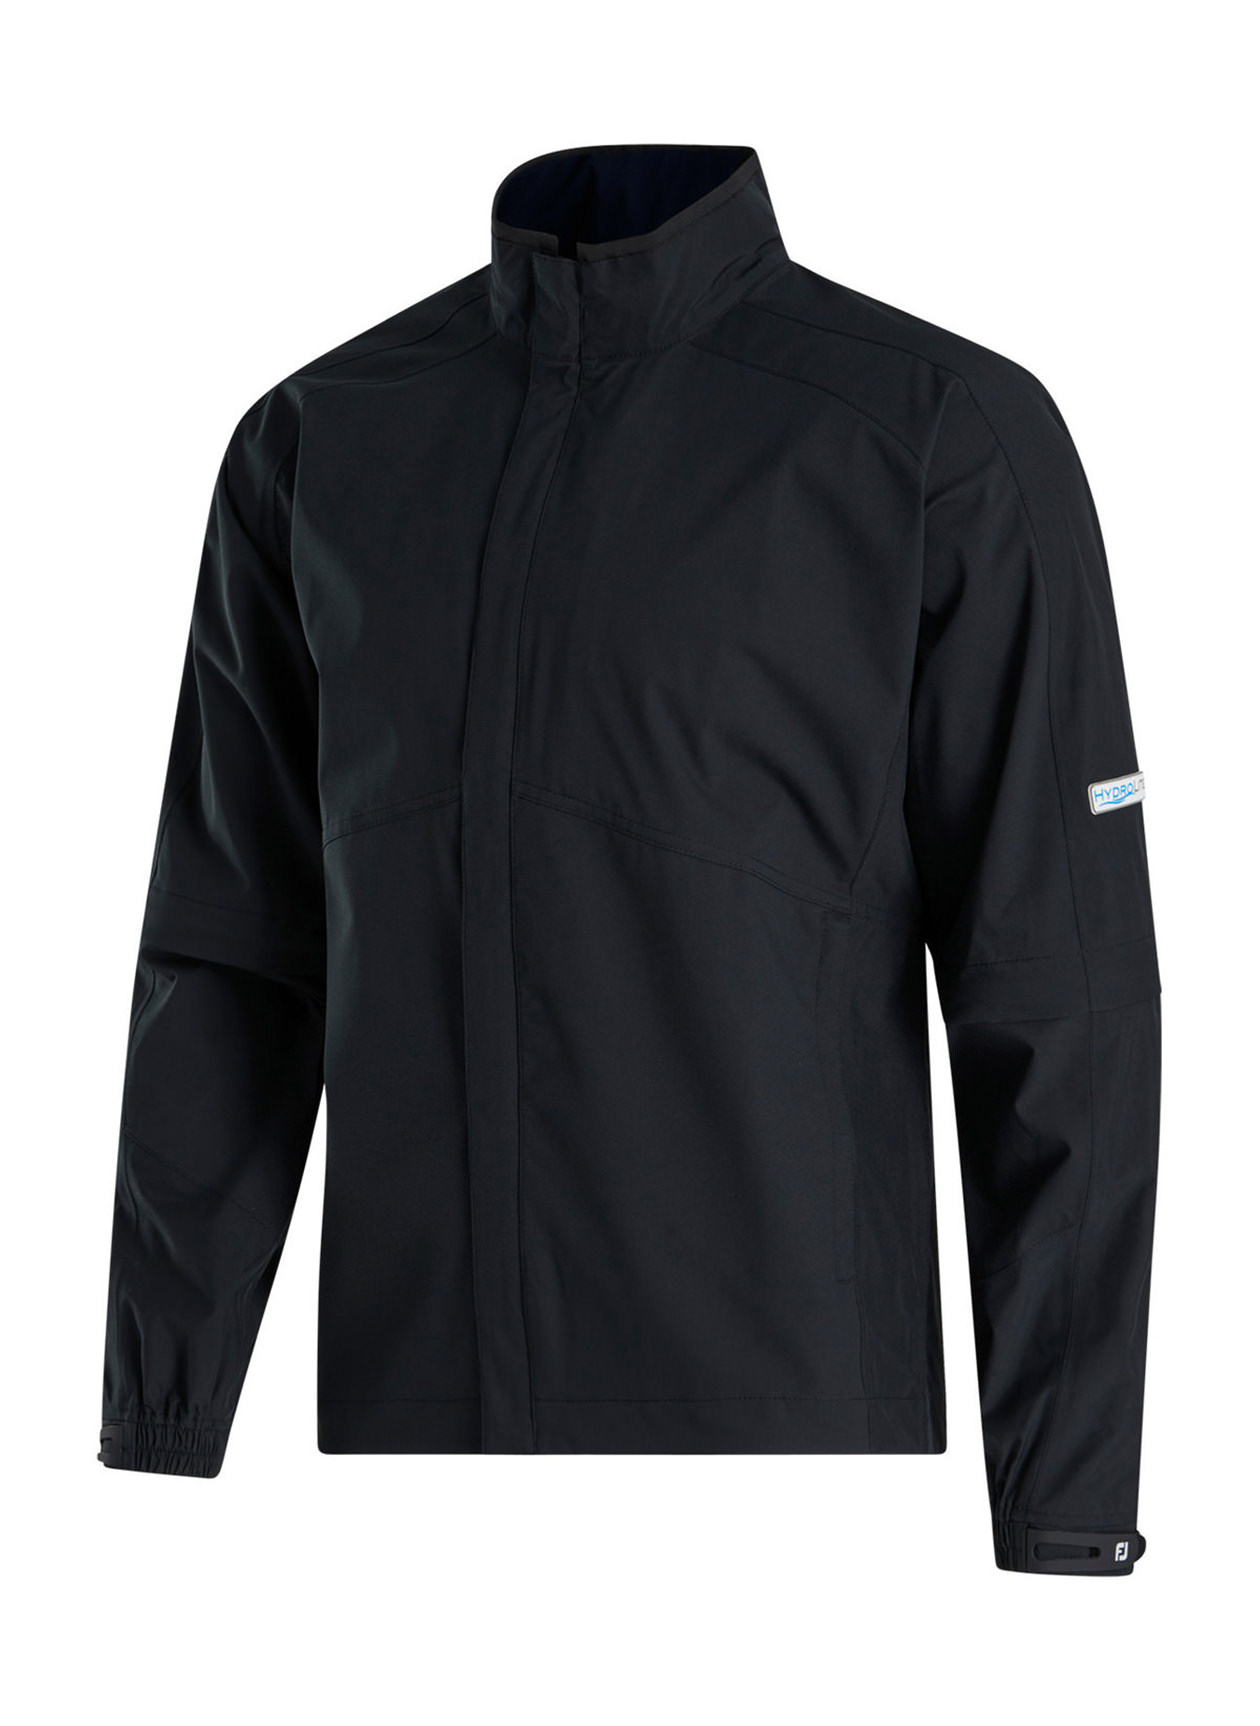 Corporate FootJoy Men's Black HydroLite Rain Jacket | Custom Jackets